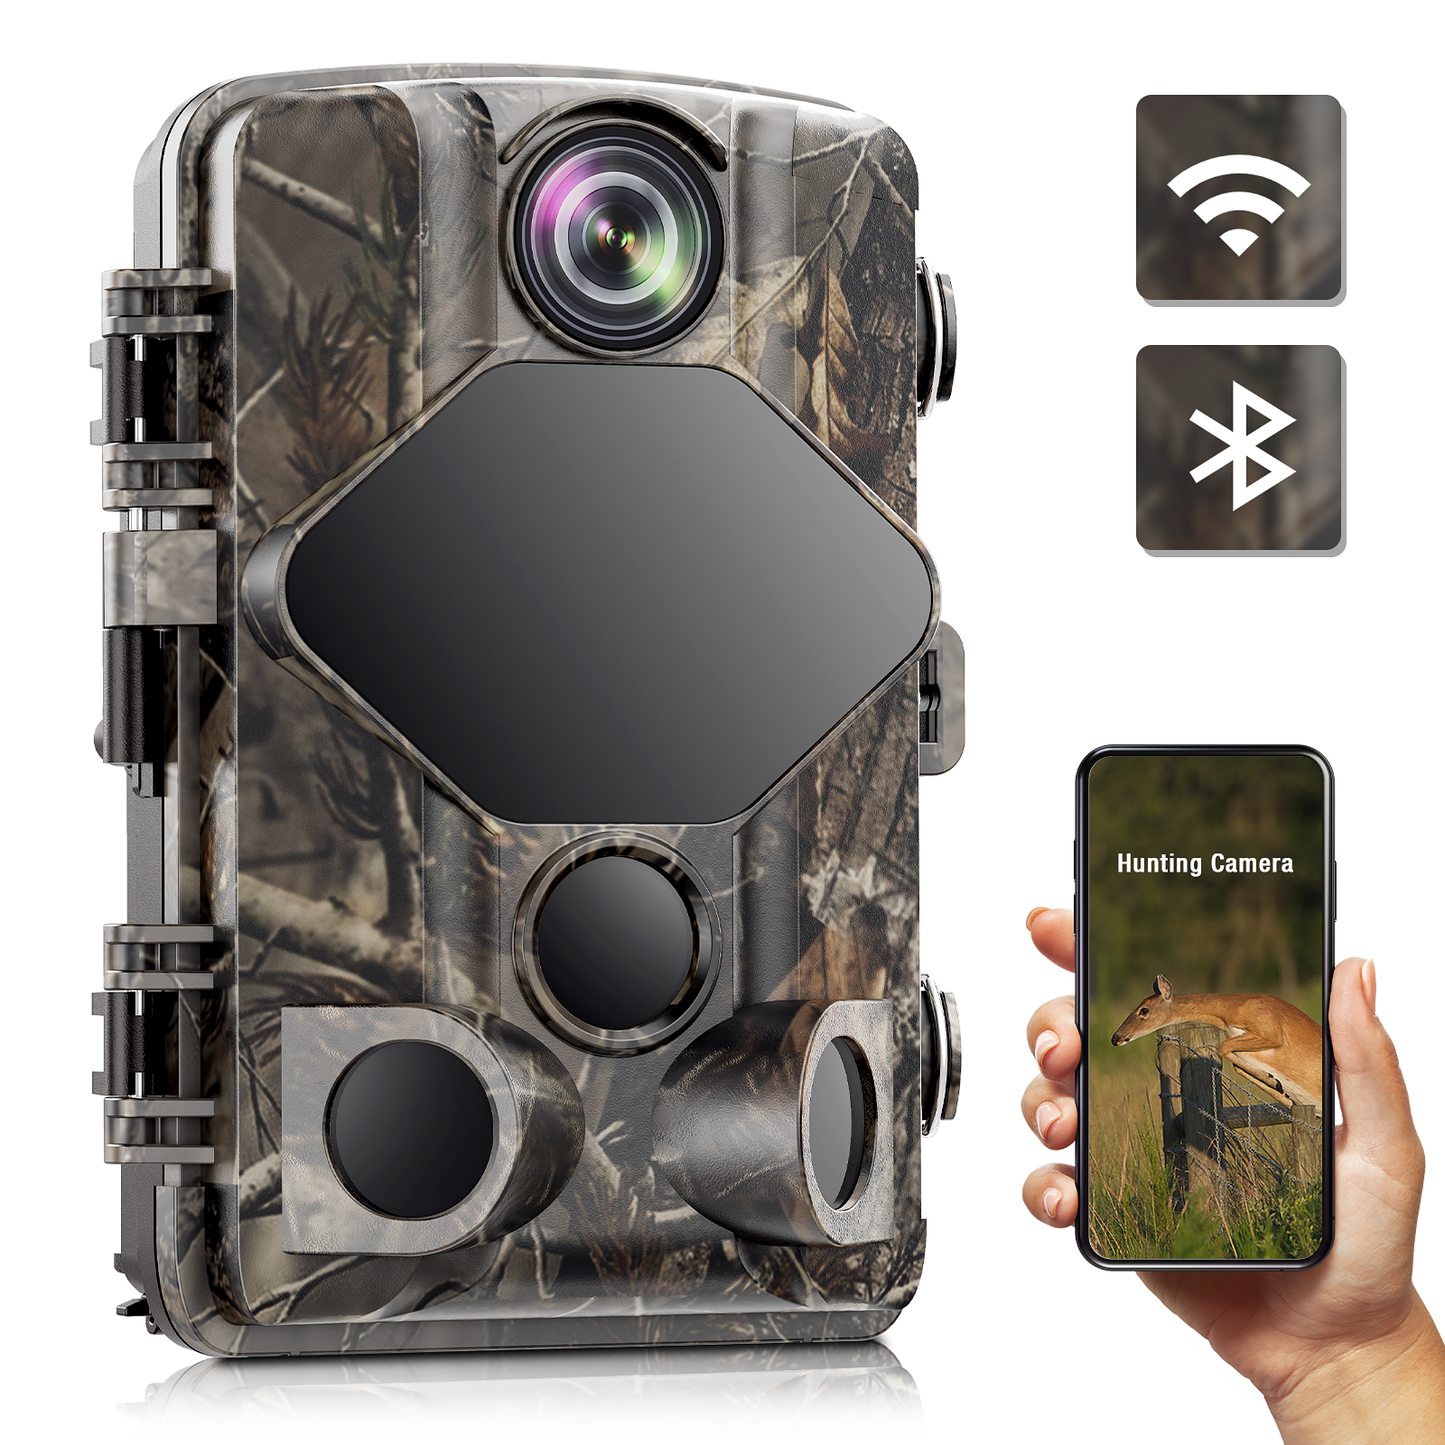 TOGUARD Trail Camera 4K Wireless 24MP Game Camera Hunting IR Outdoor Wildlife Monitoring Night Vision